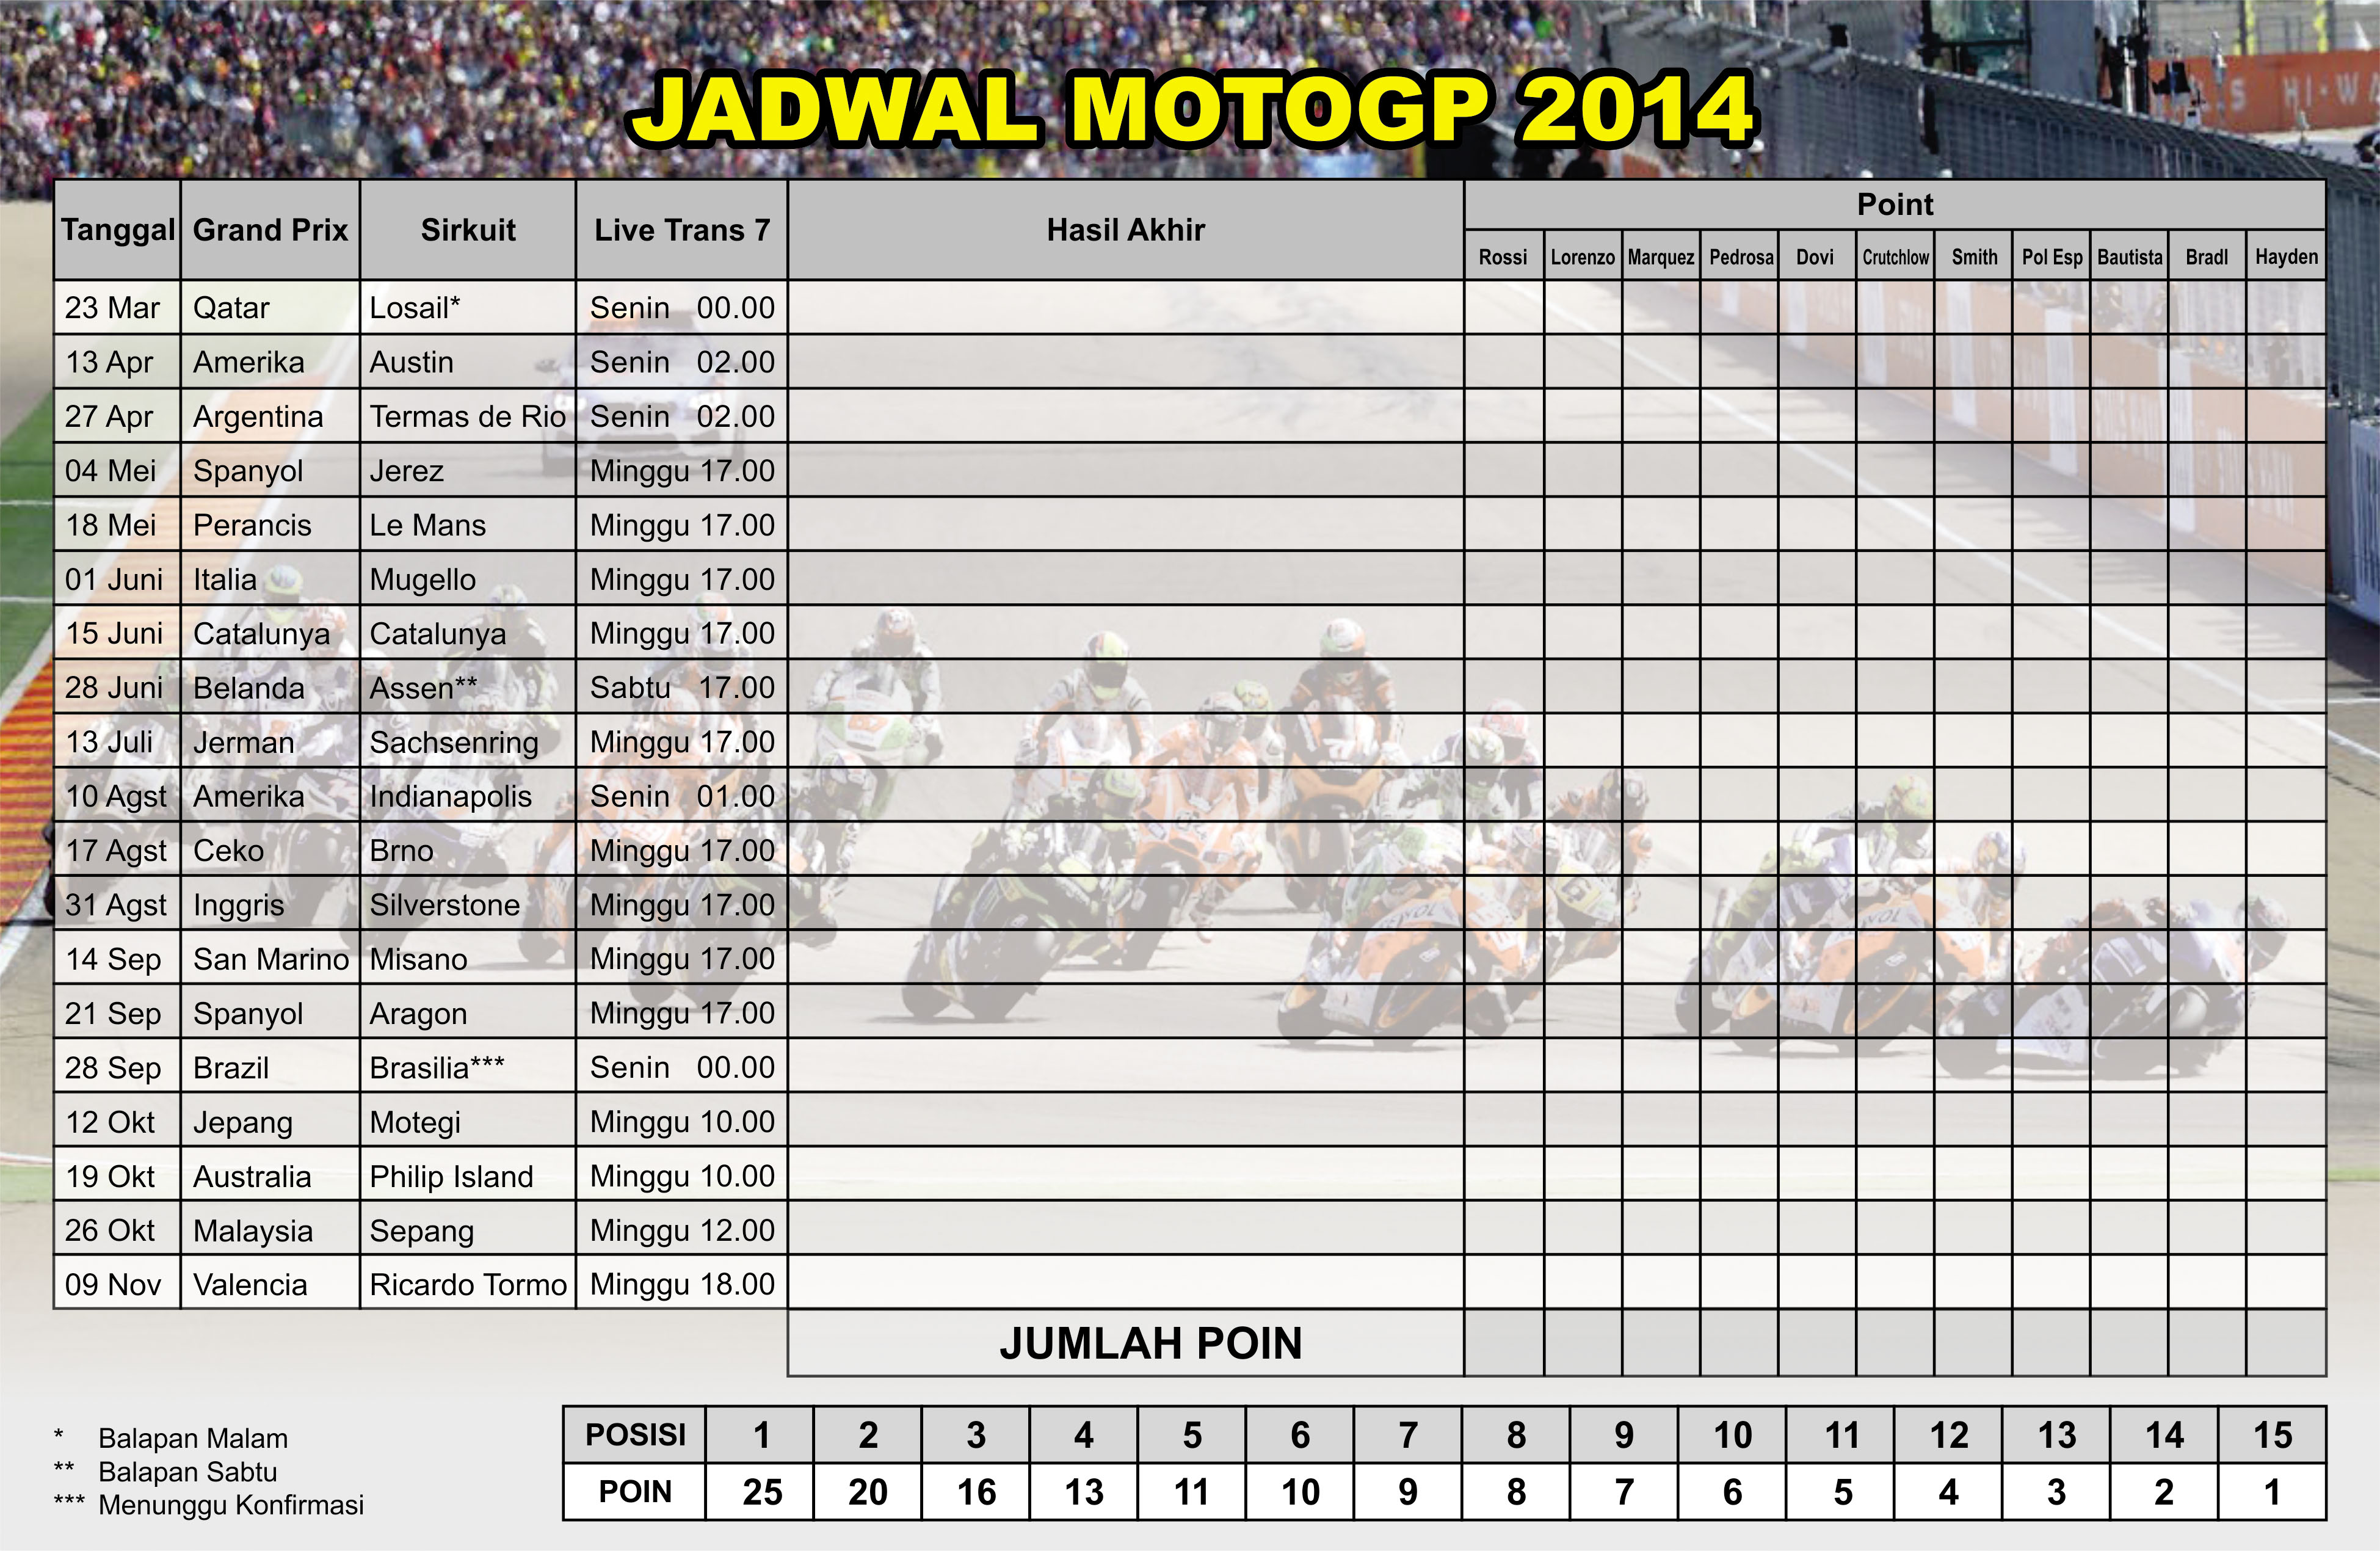 Jadwal MotoGP 2014 Plus Jadwal Live Trans 7